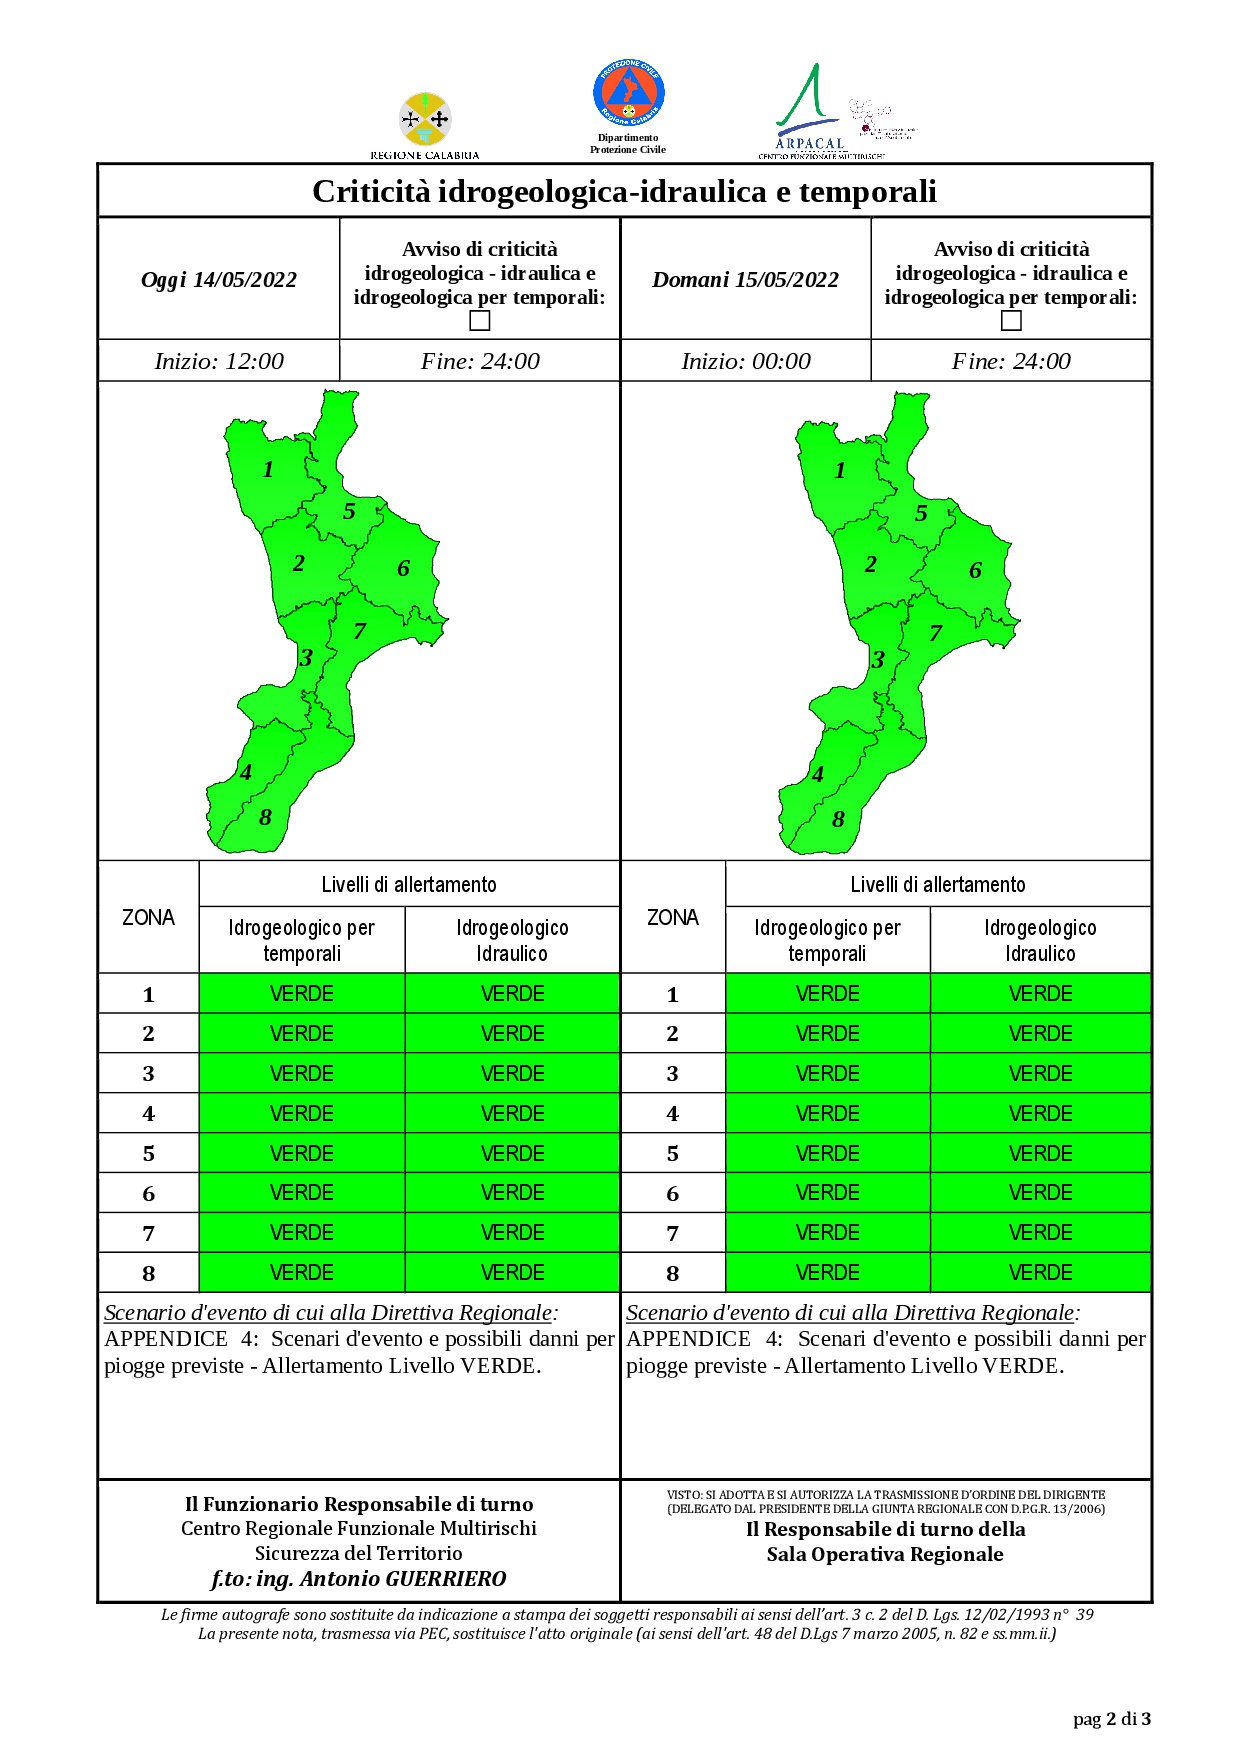 Criticità idrogeologica-idraulica e temporali in Calabria 14-05-2022